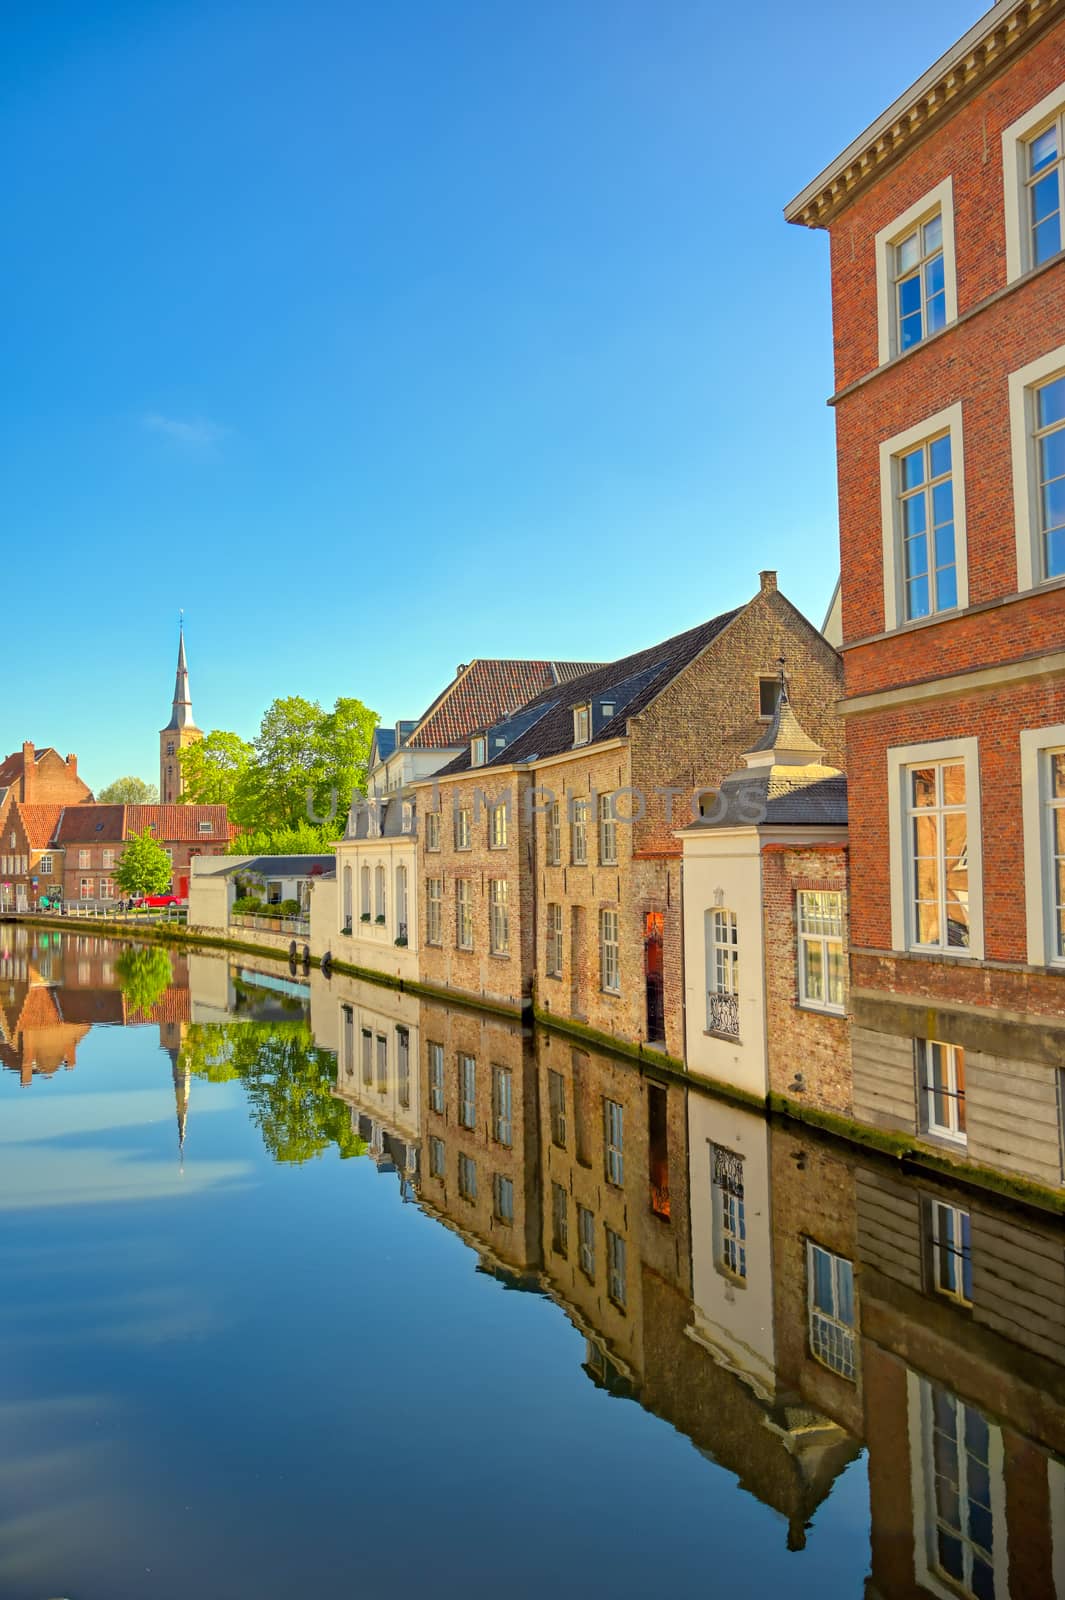 Bruges, Belgium canals by jbyard22